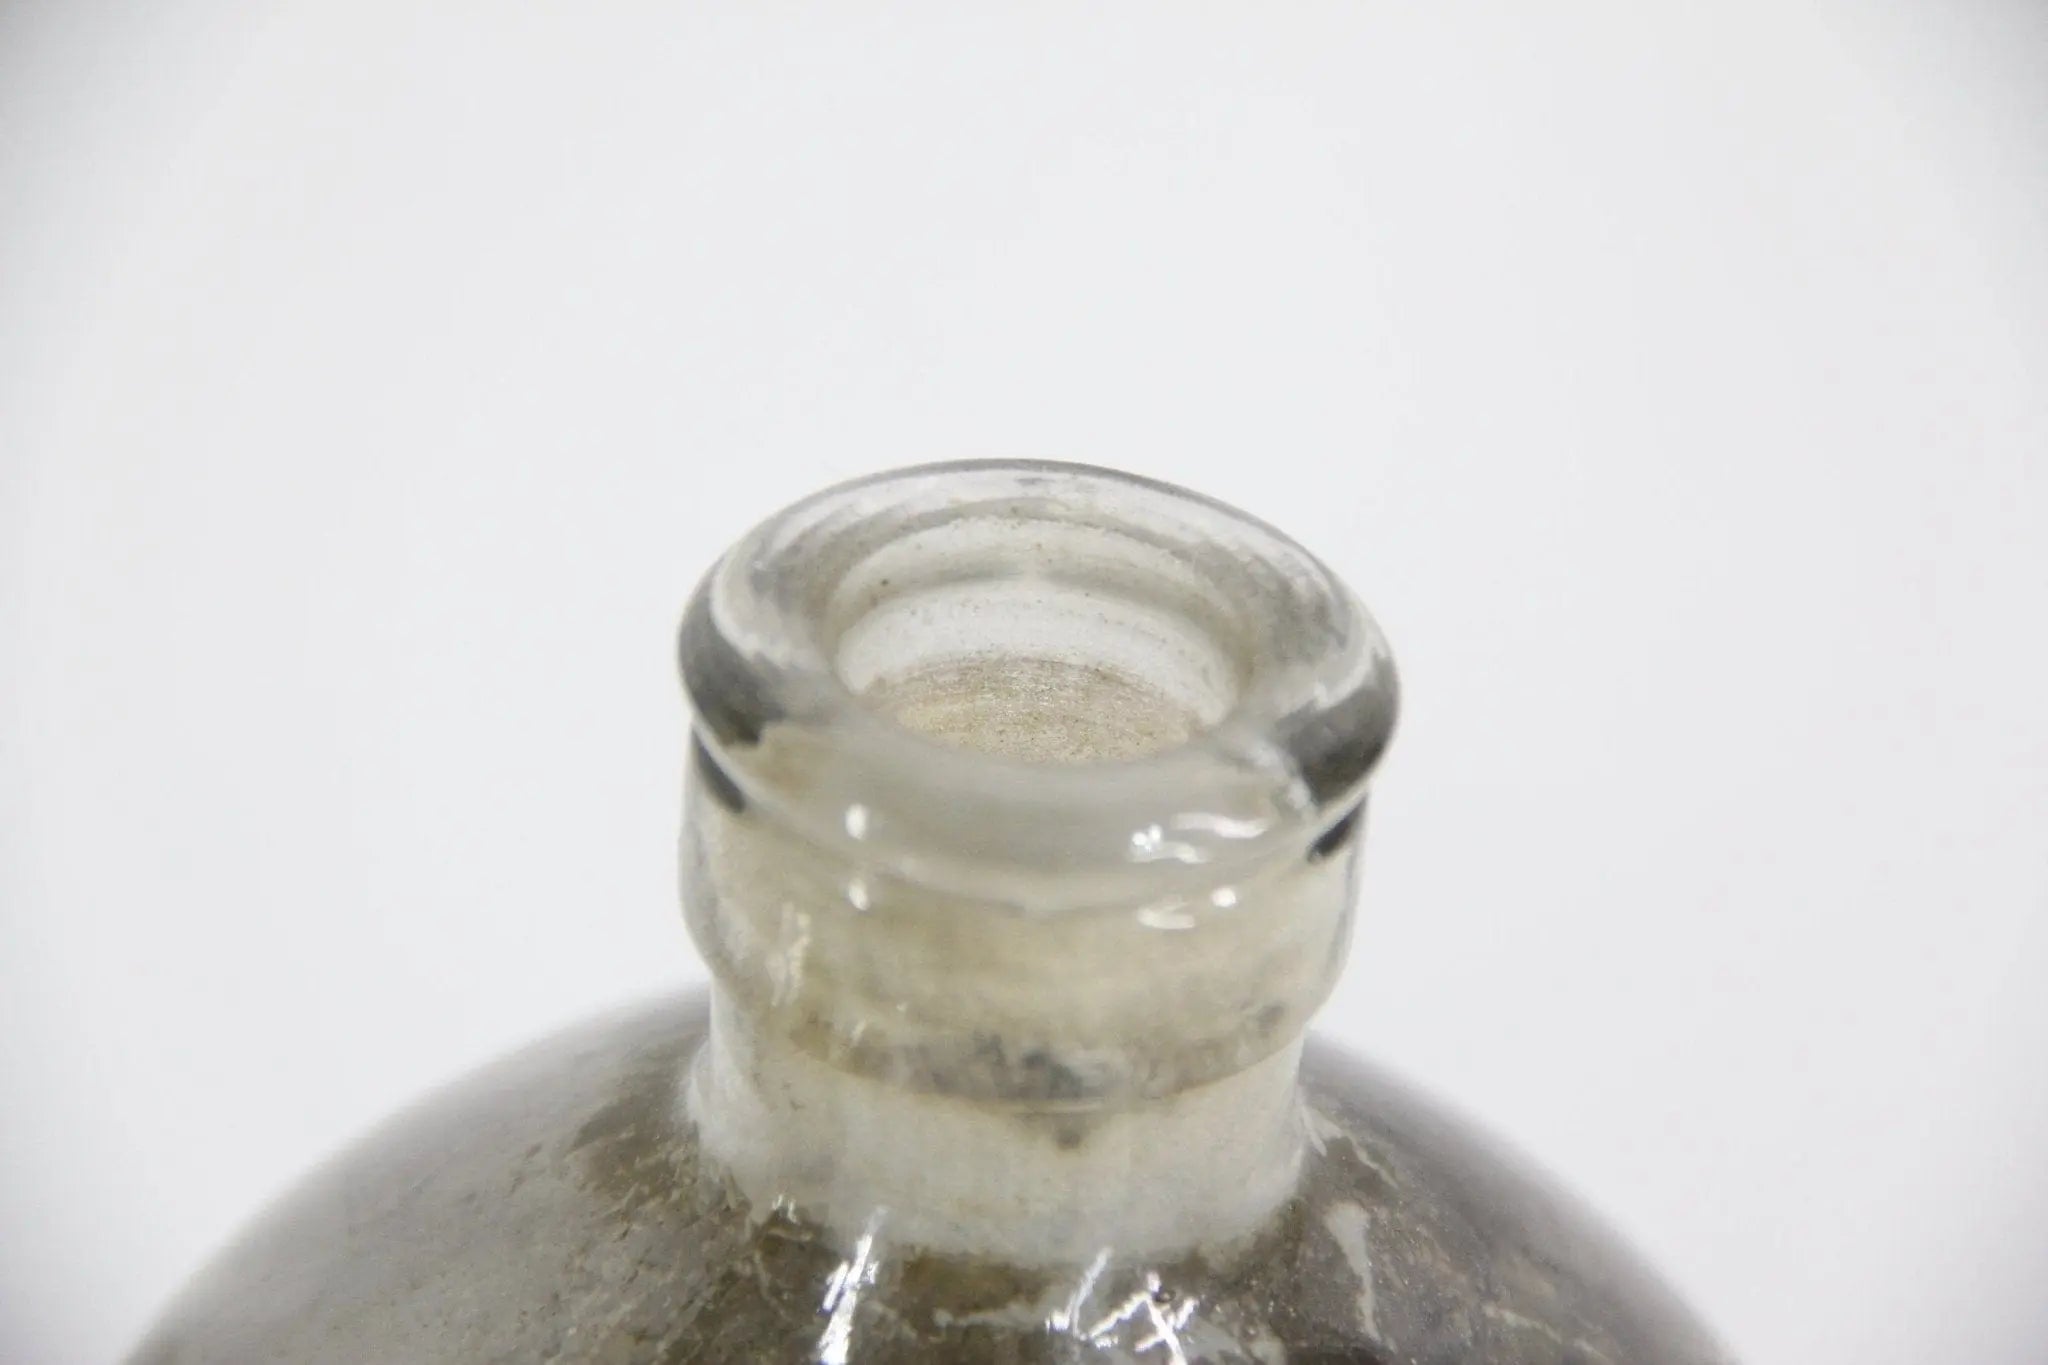 Antique Mercury Glass Apothecary Bottle | Stopper  Debra Hall Lifestyle